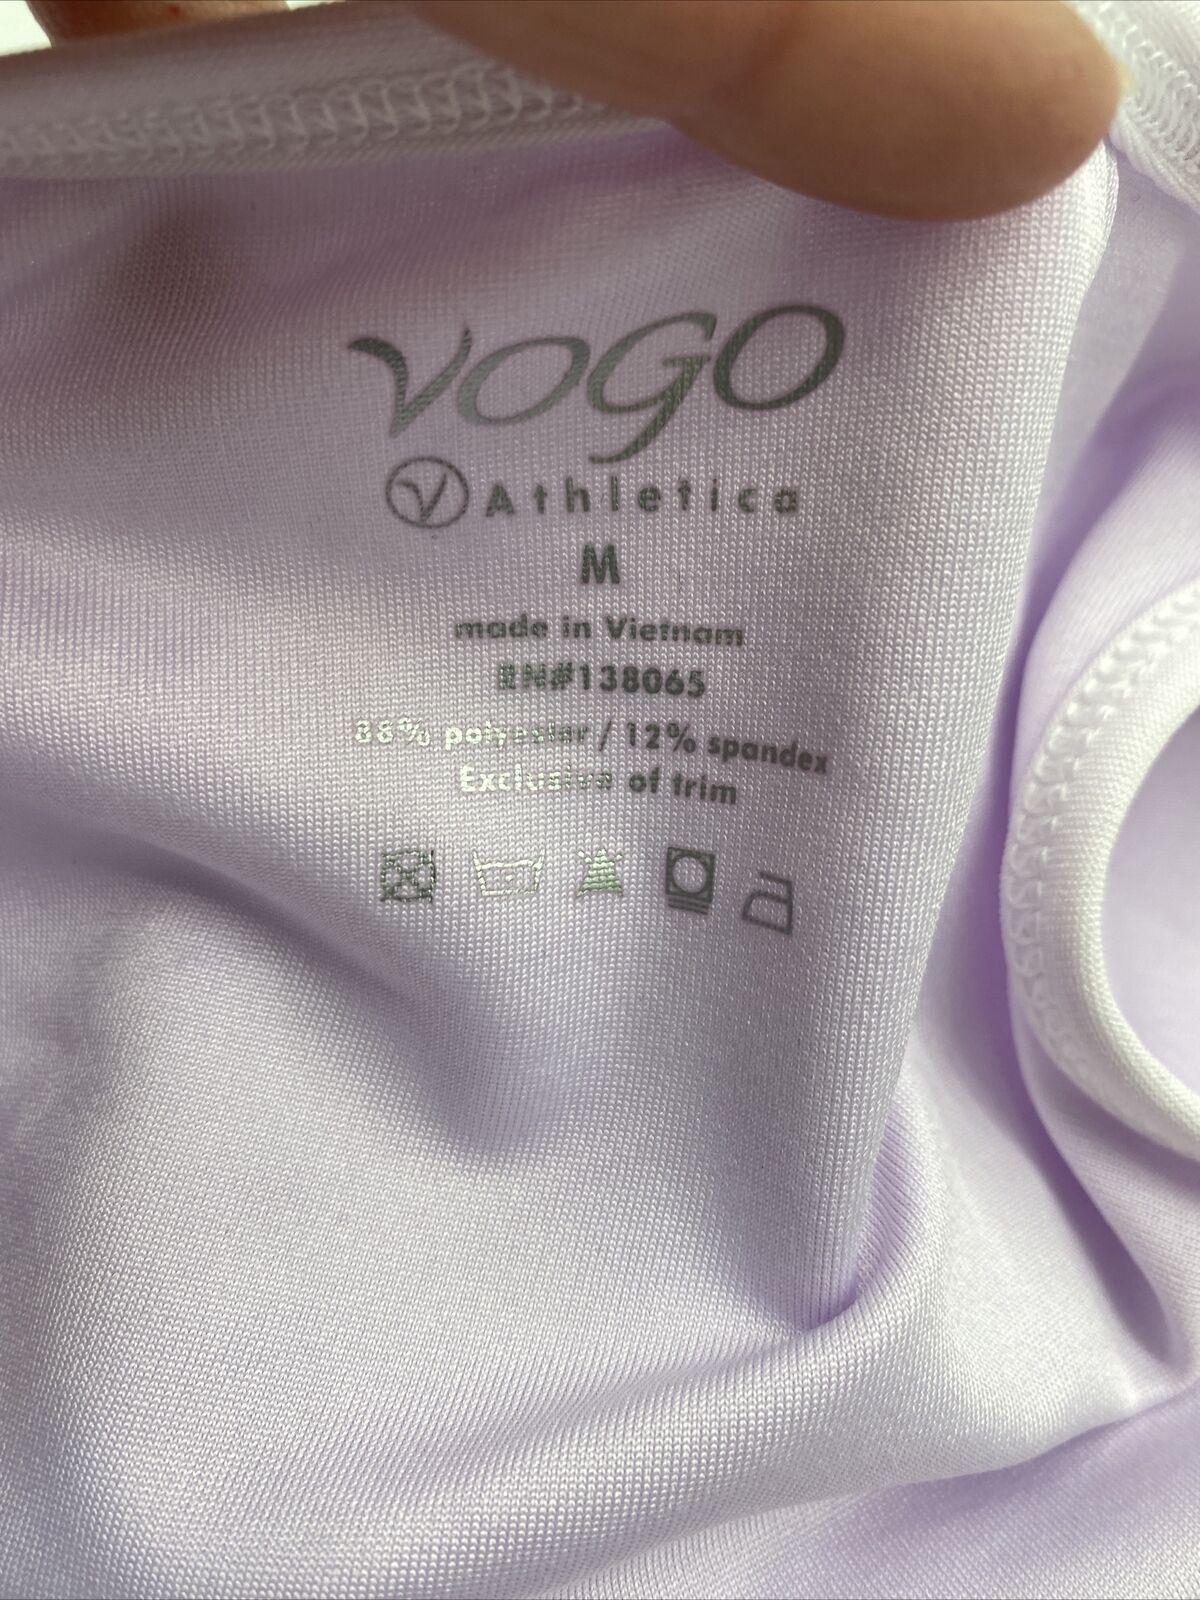 VOGO Athletica Activewear Tank Top Lilly Purple Womens Size Medium